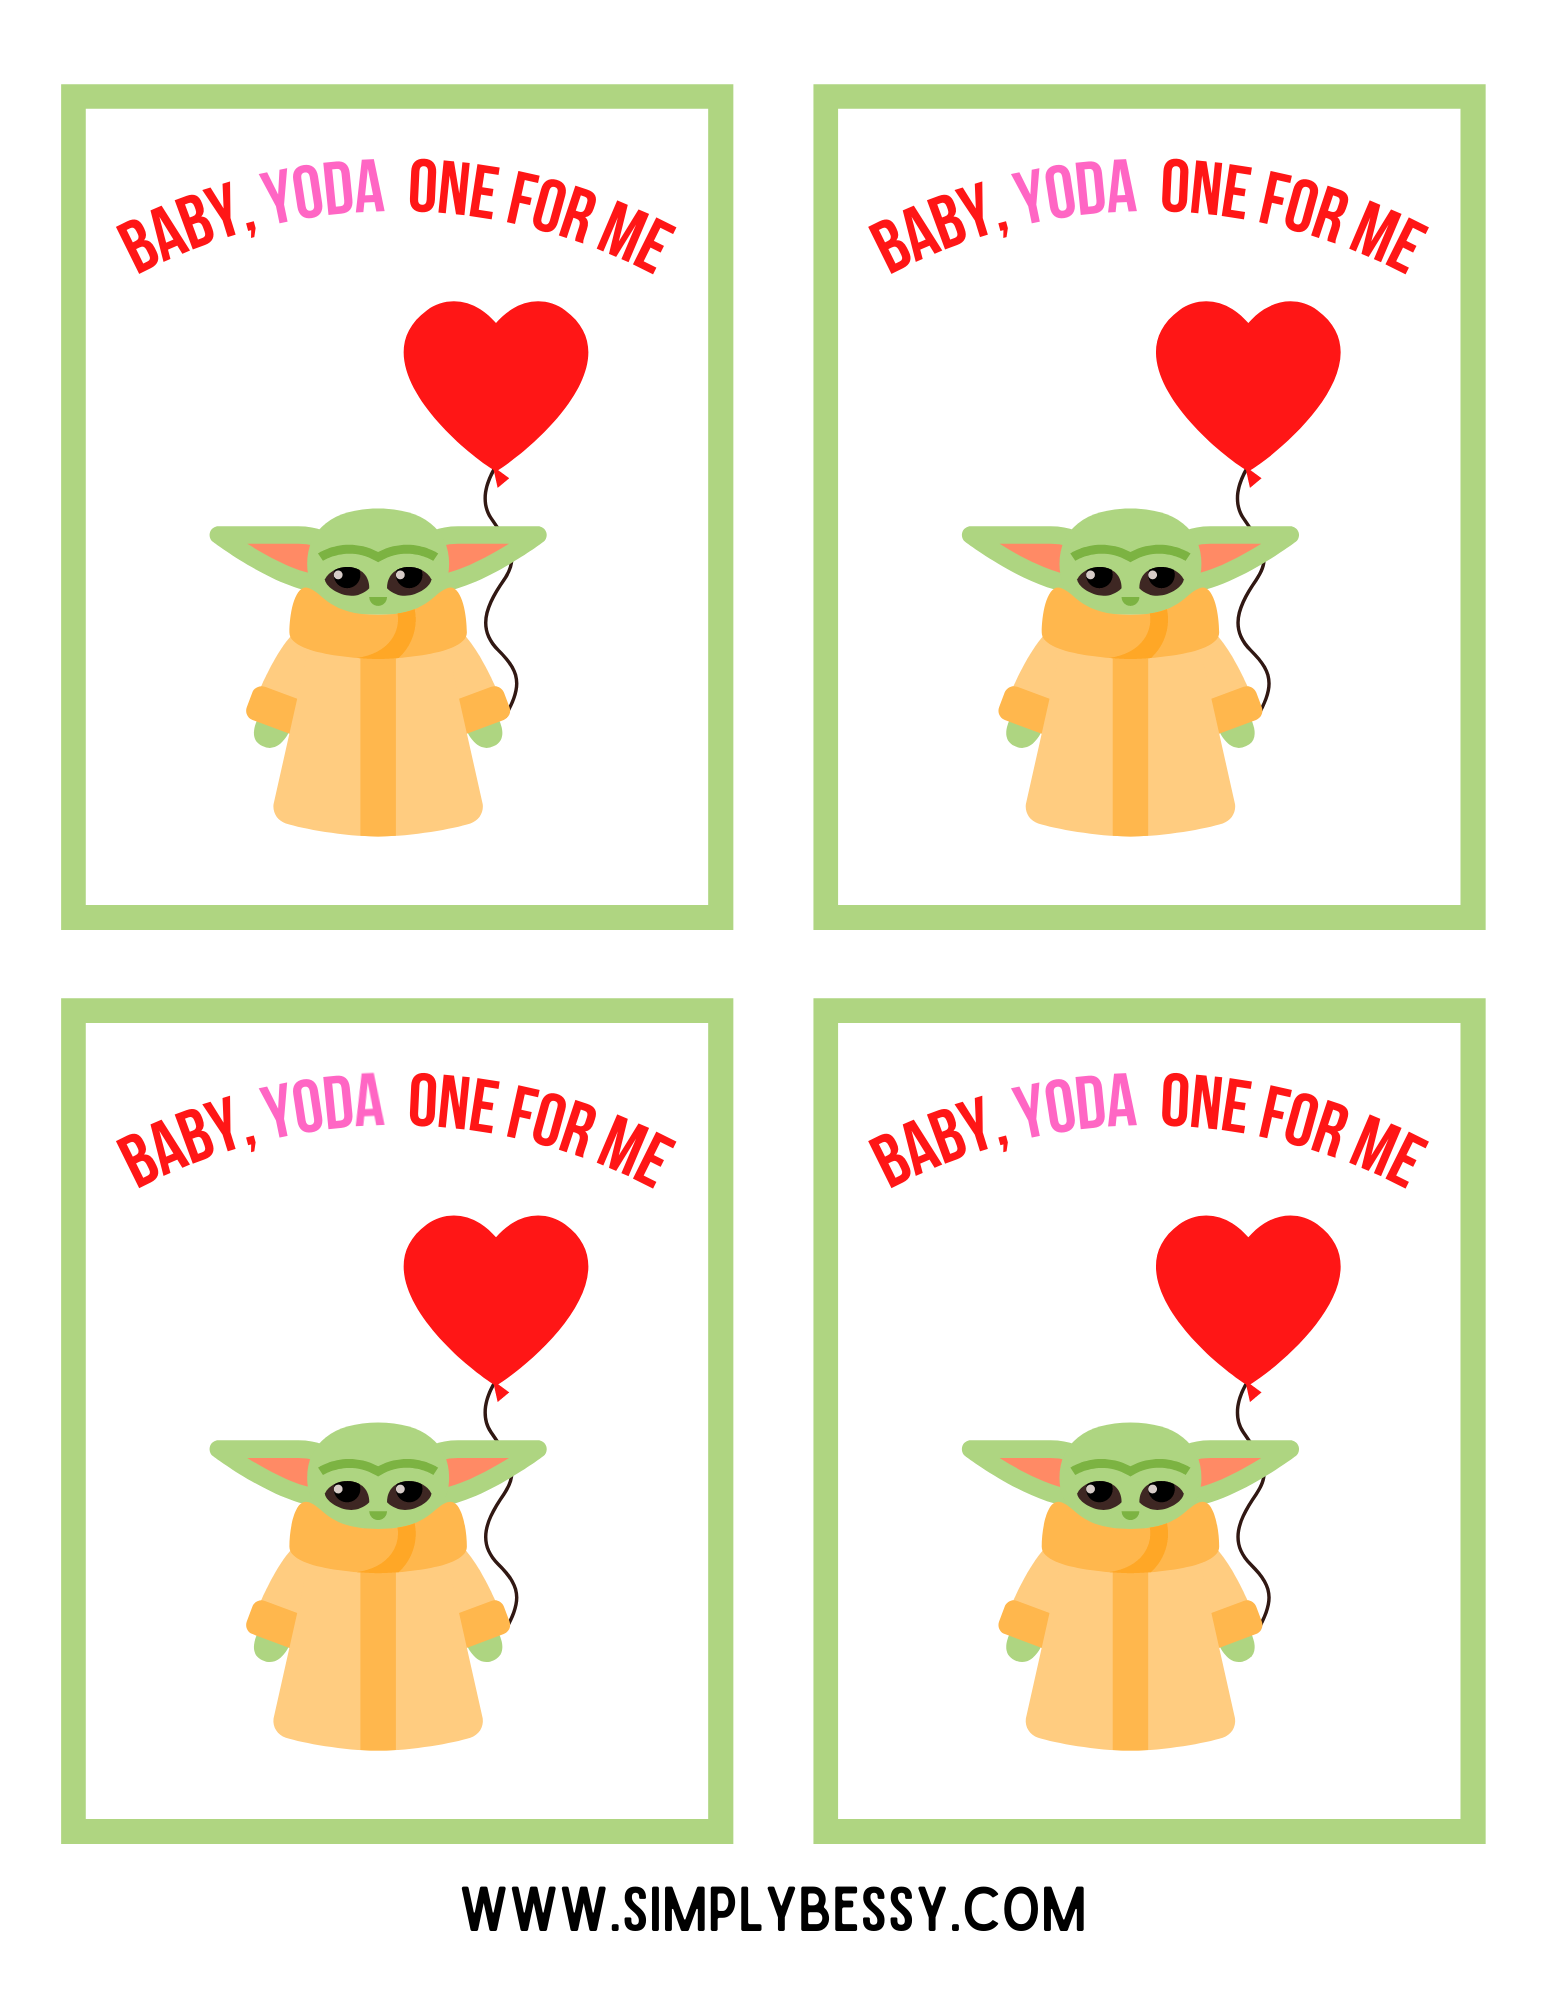 Star Wars Baby Yoda The Child Valentine Cards Free Printable